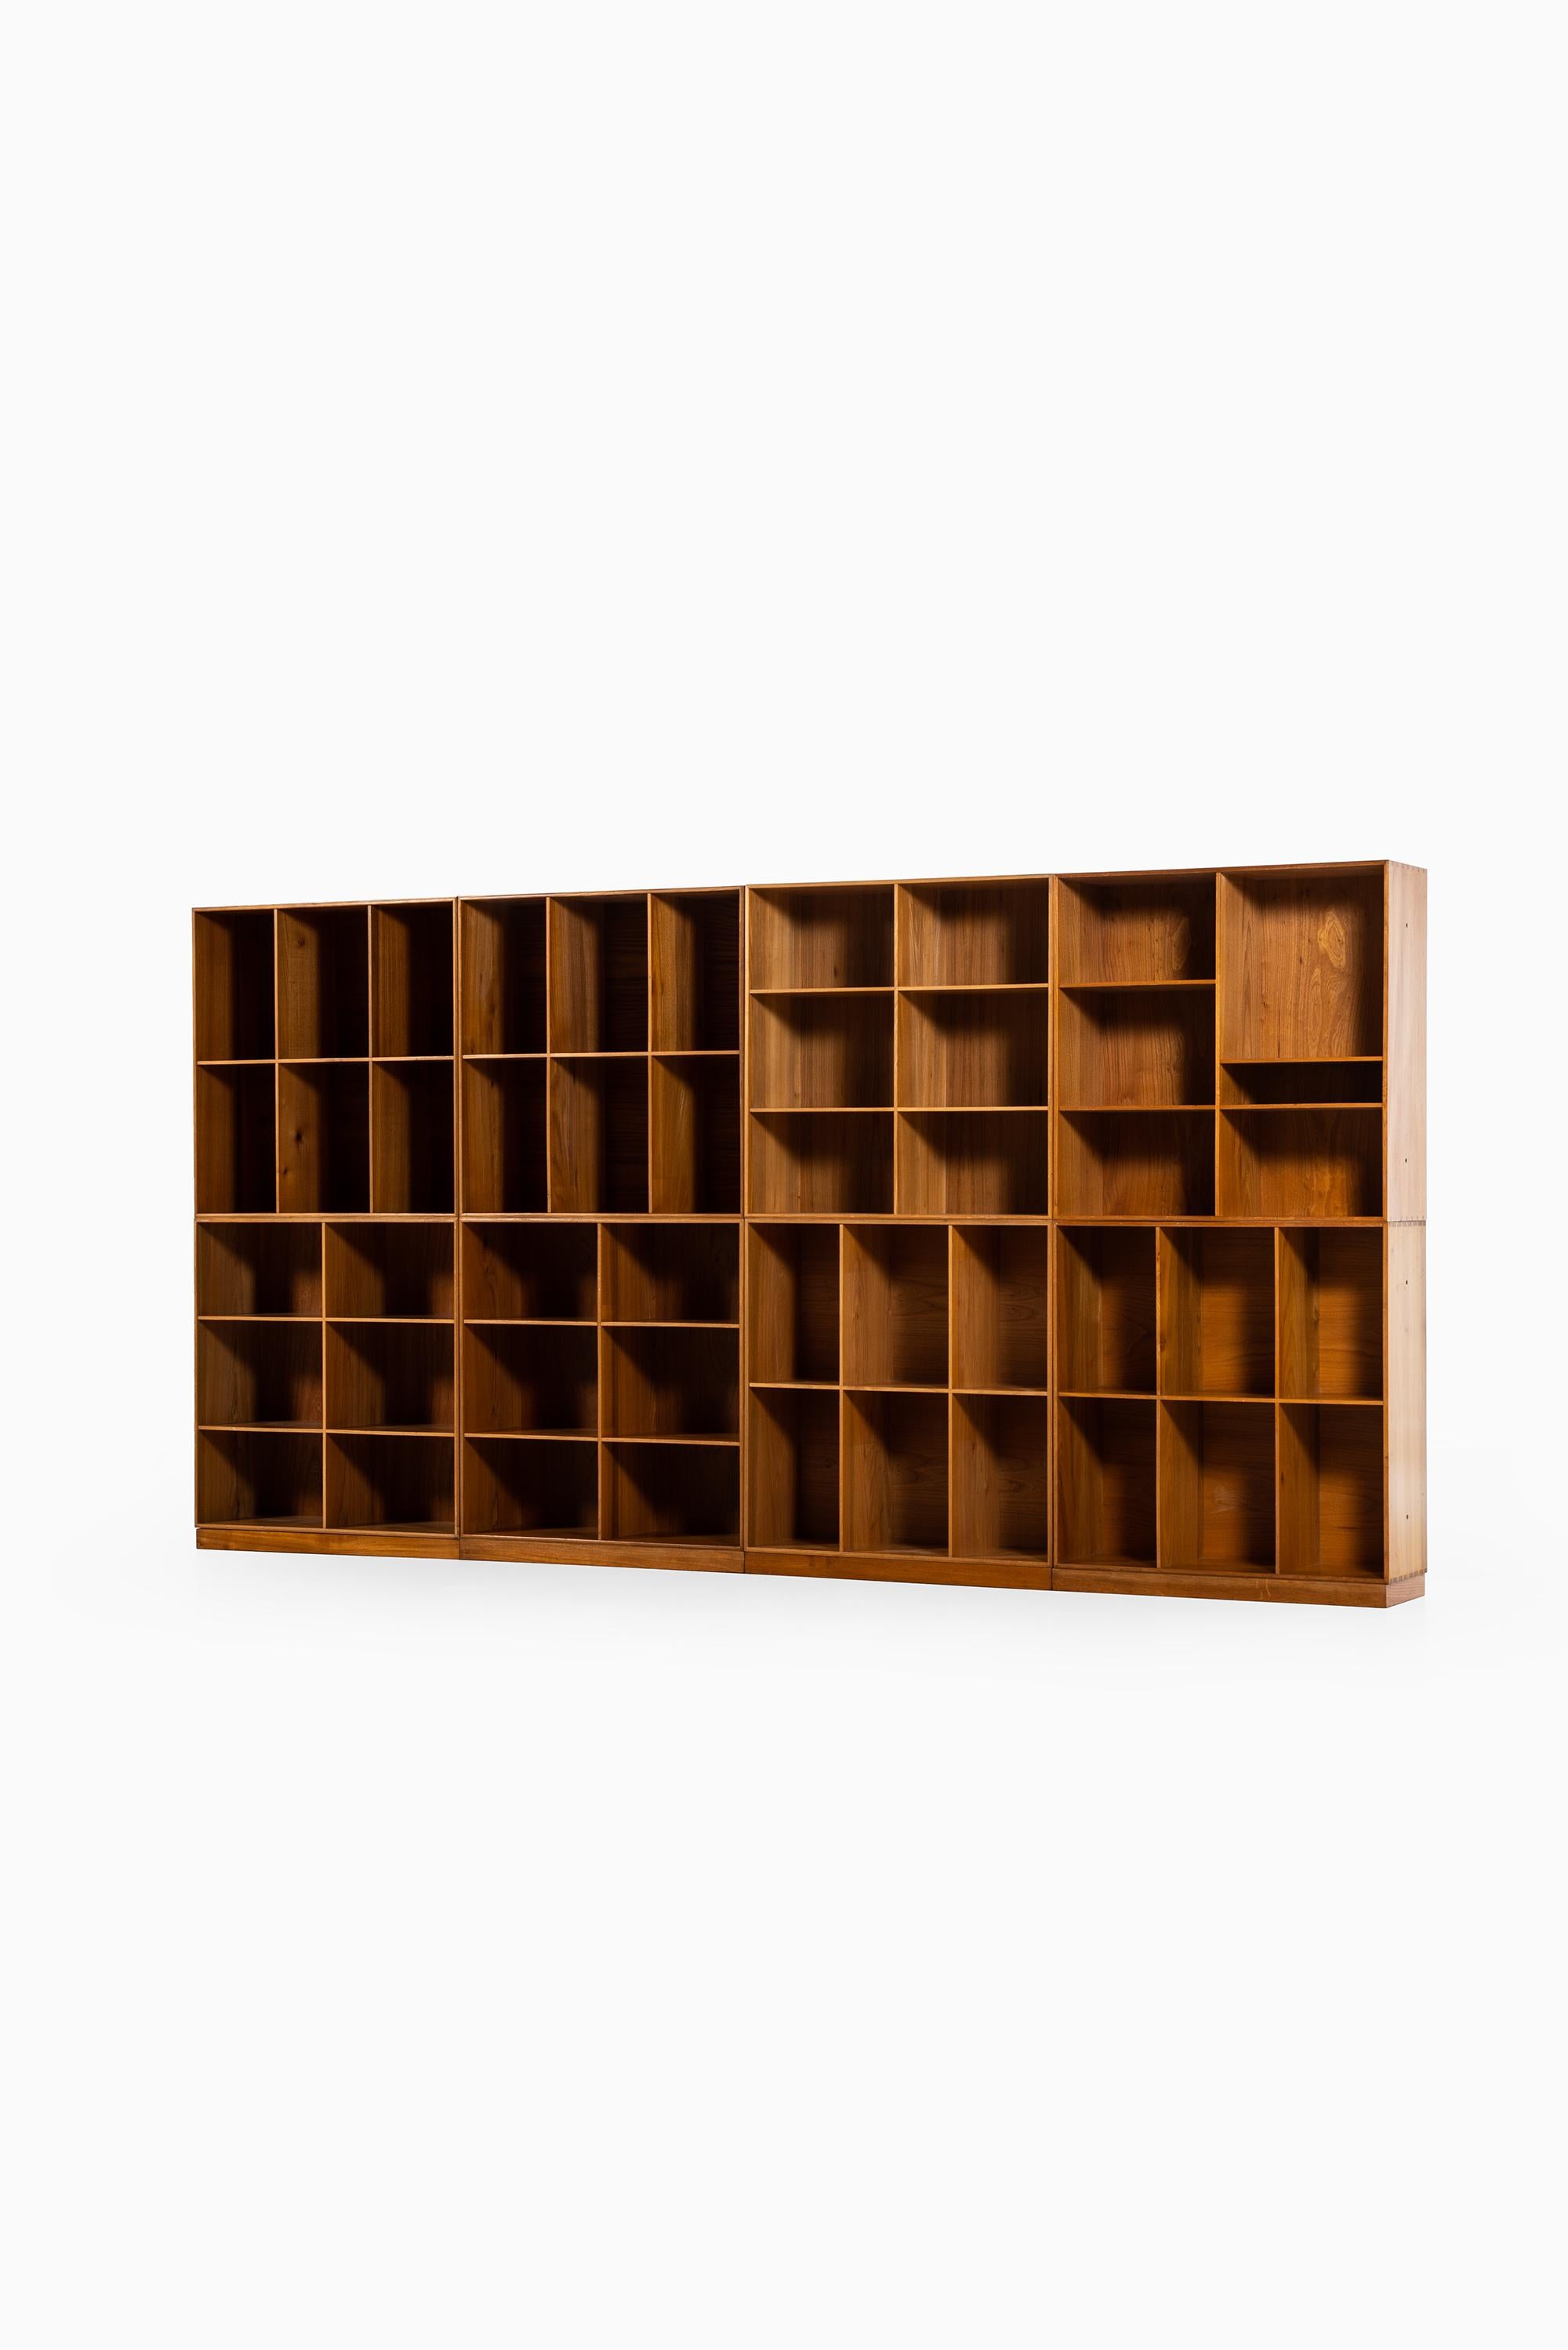 Set of 8 bookcases designed by Mogens Koch. Produced by Rud Rasmussen in Denmark.